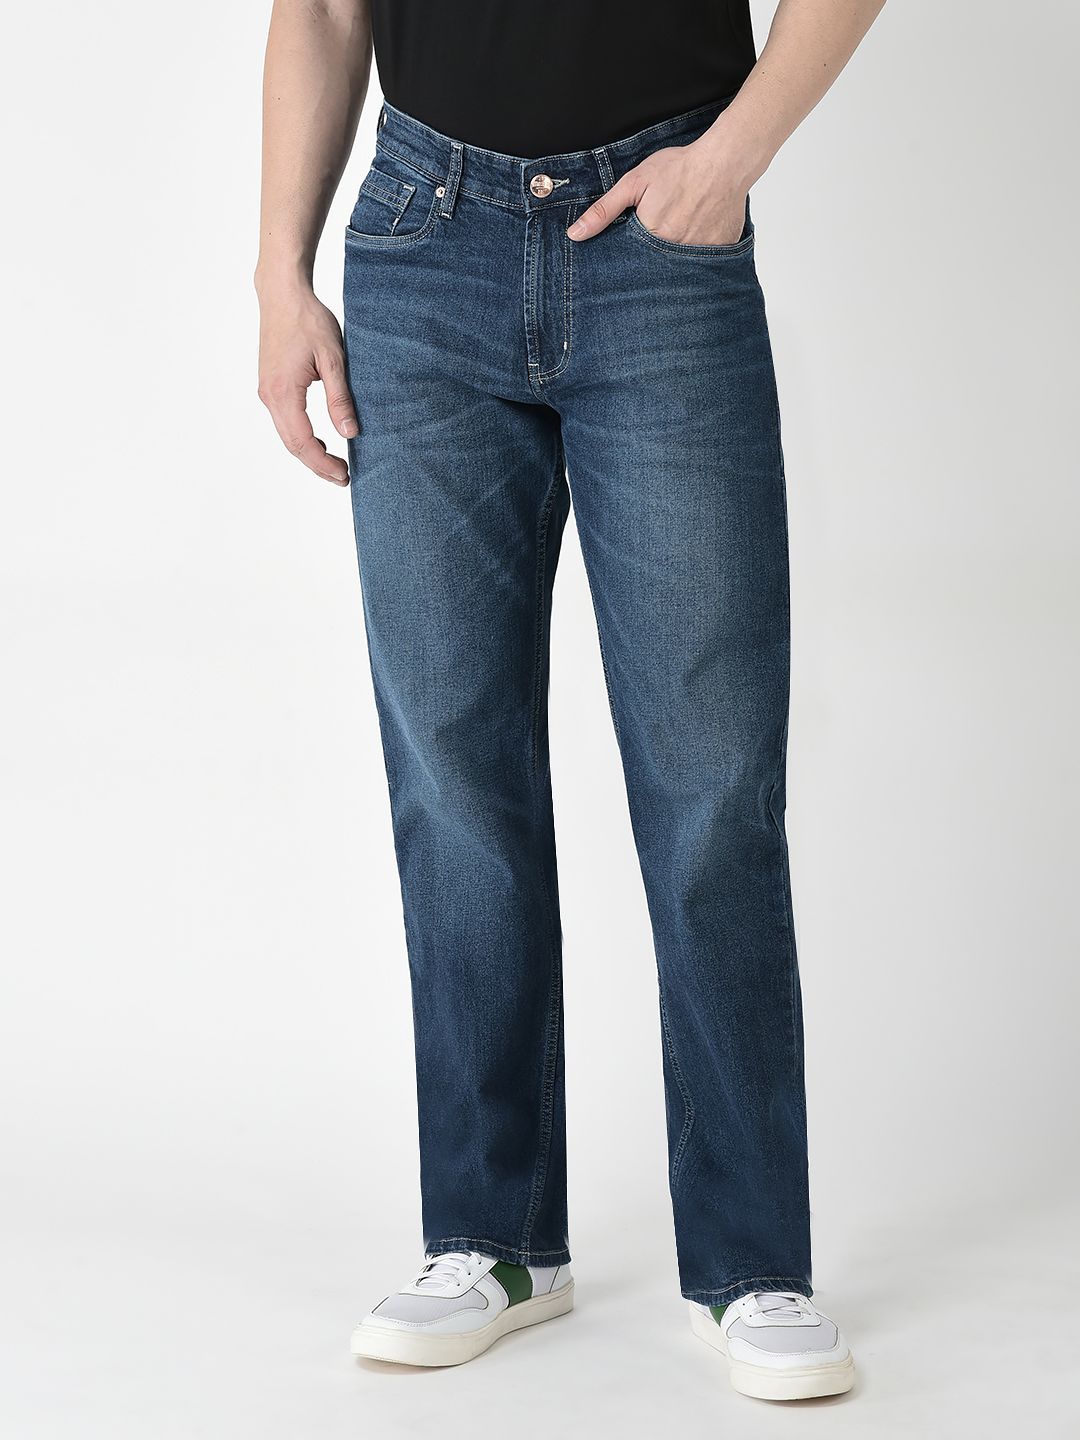 Collection 122+ mens regular fit jeans best